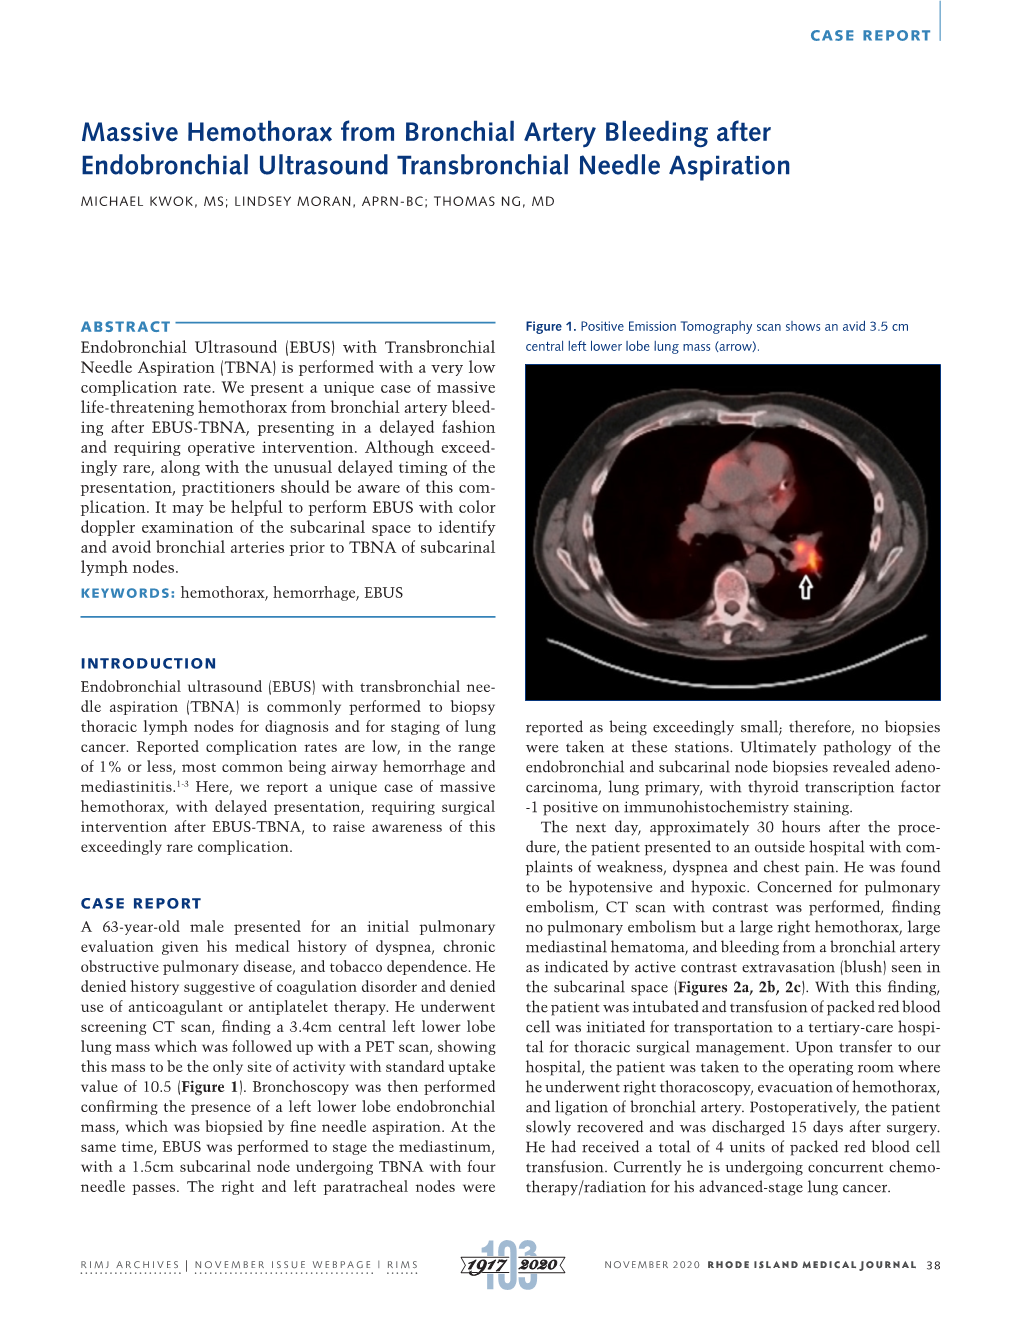 Massive Hemothorax from Bronchial Artery Bleeding After Endobronchial Ultrasound Transbronchial Needle Aspiration